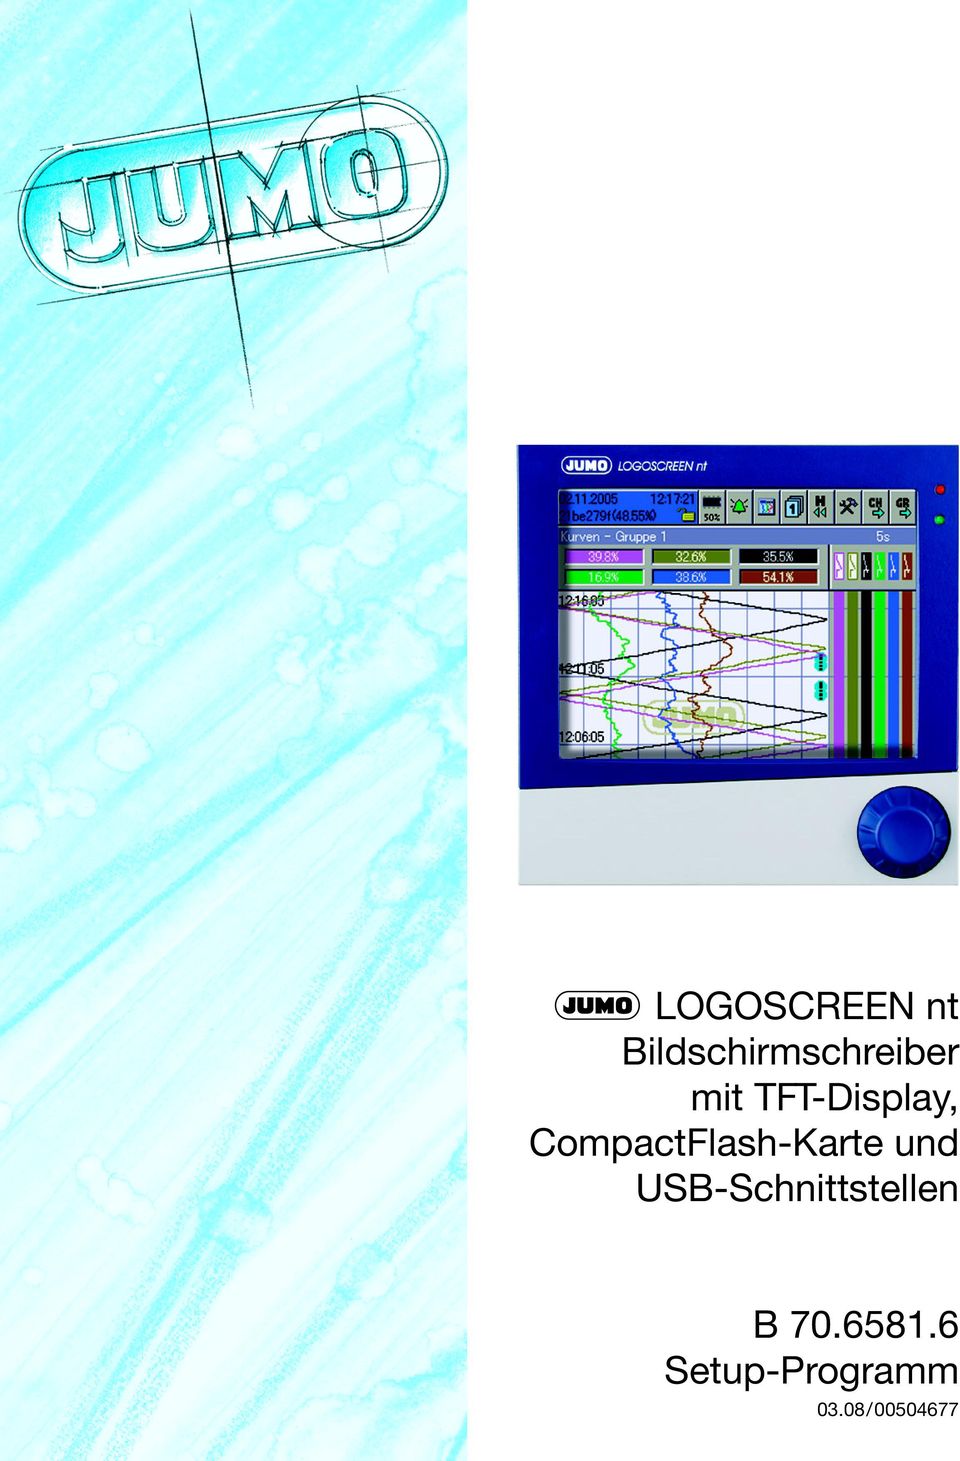 TFT-Display, CompactFlash-Karte